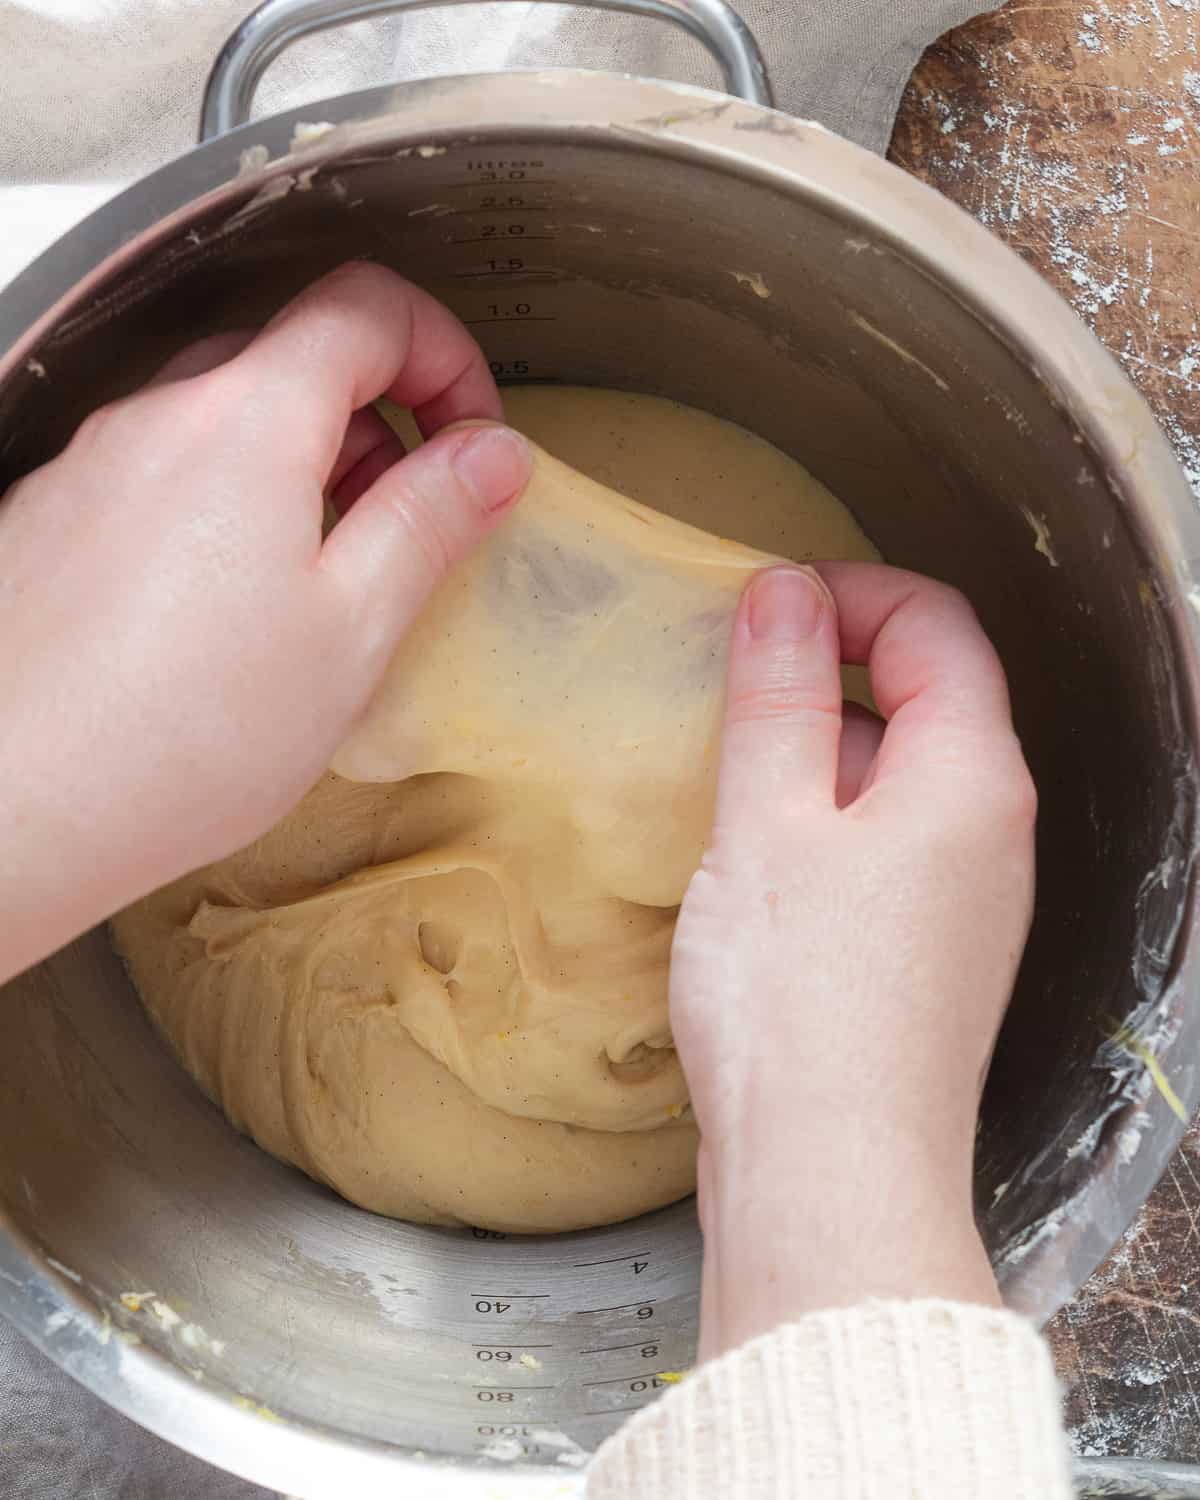 windowpane test dough for the Italian Christmas cake